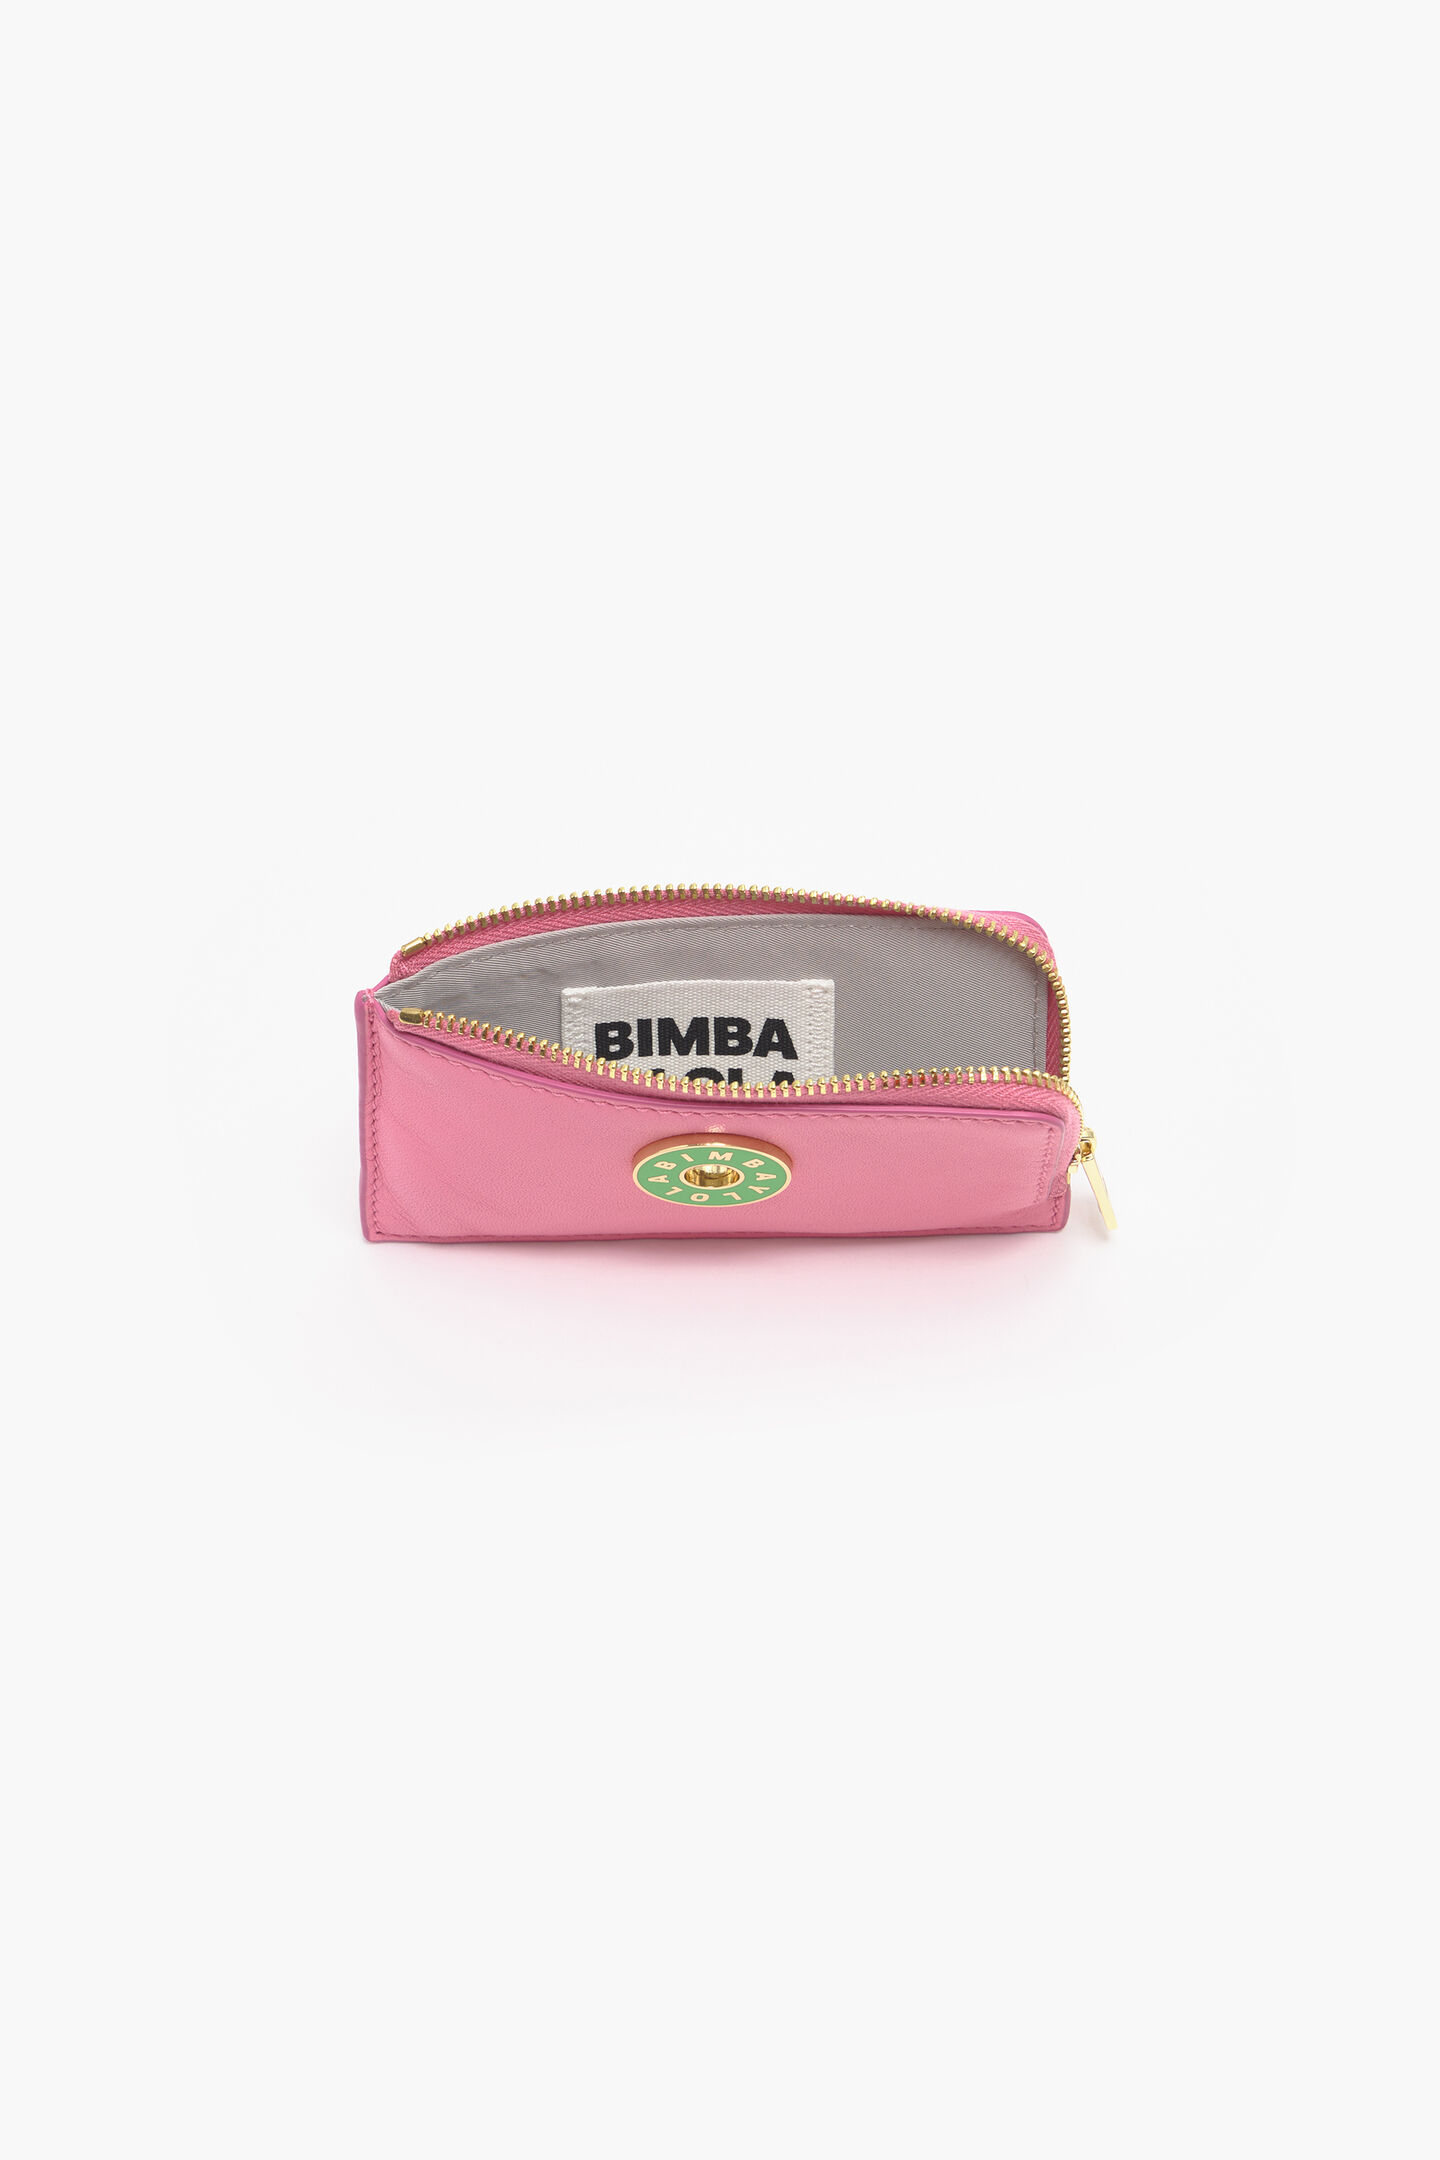 Bimba Y Lola Logo-Plaque Leather Coin Purse